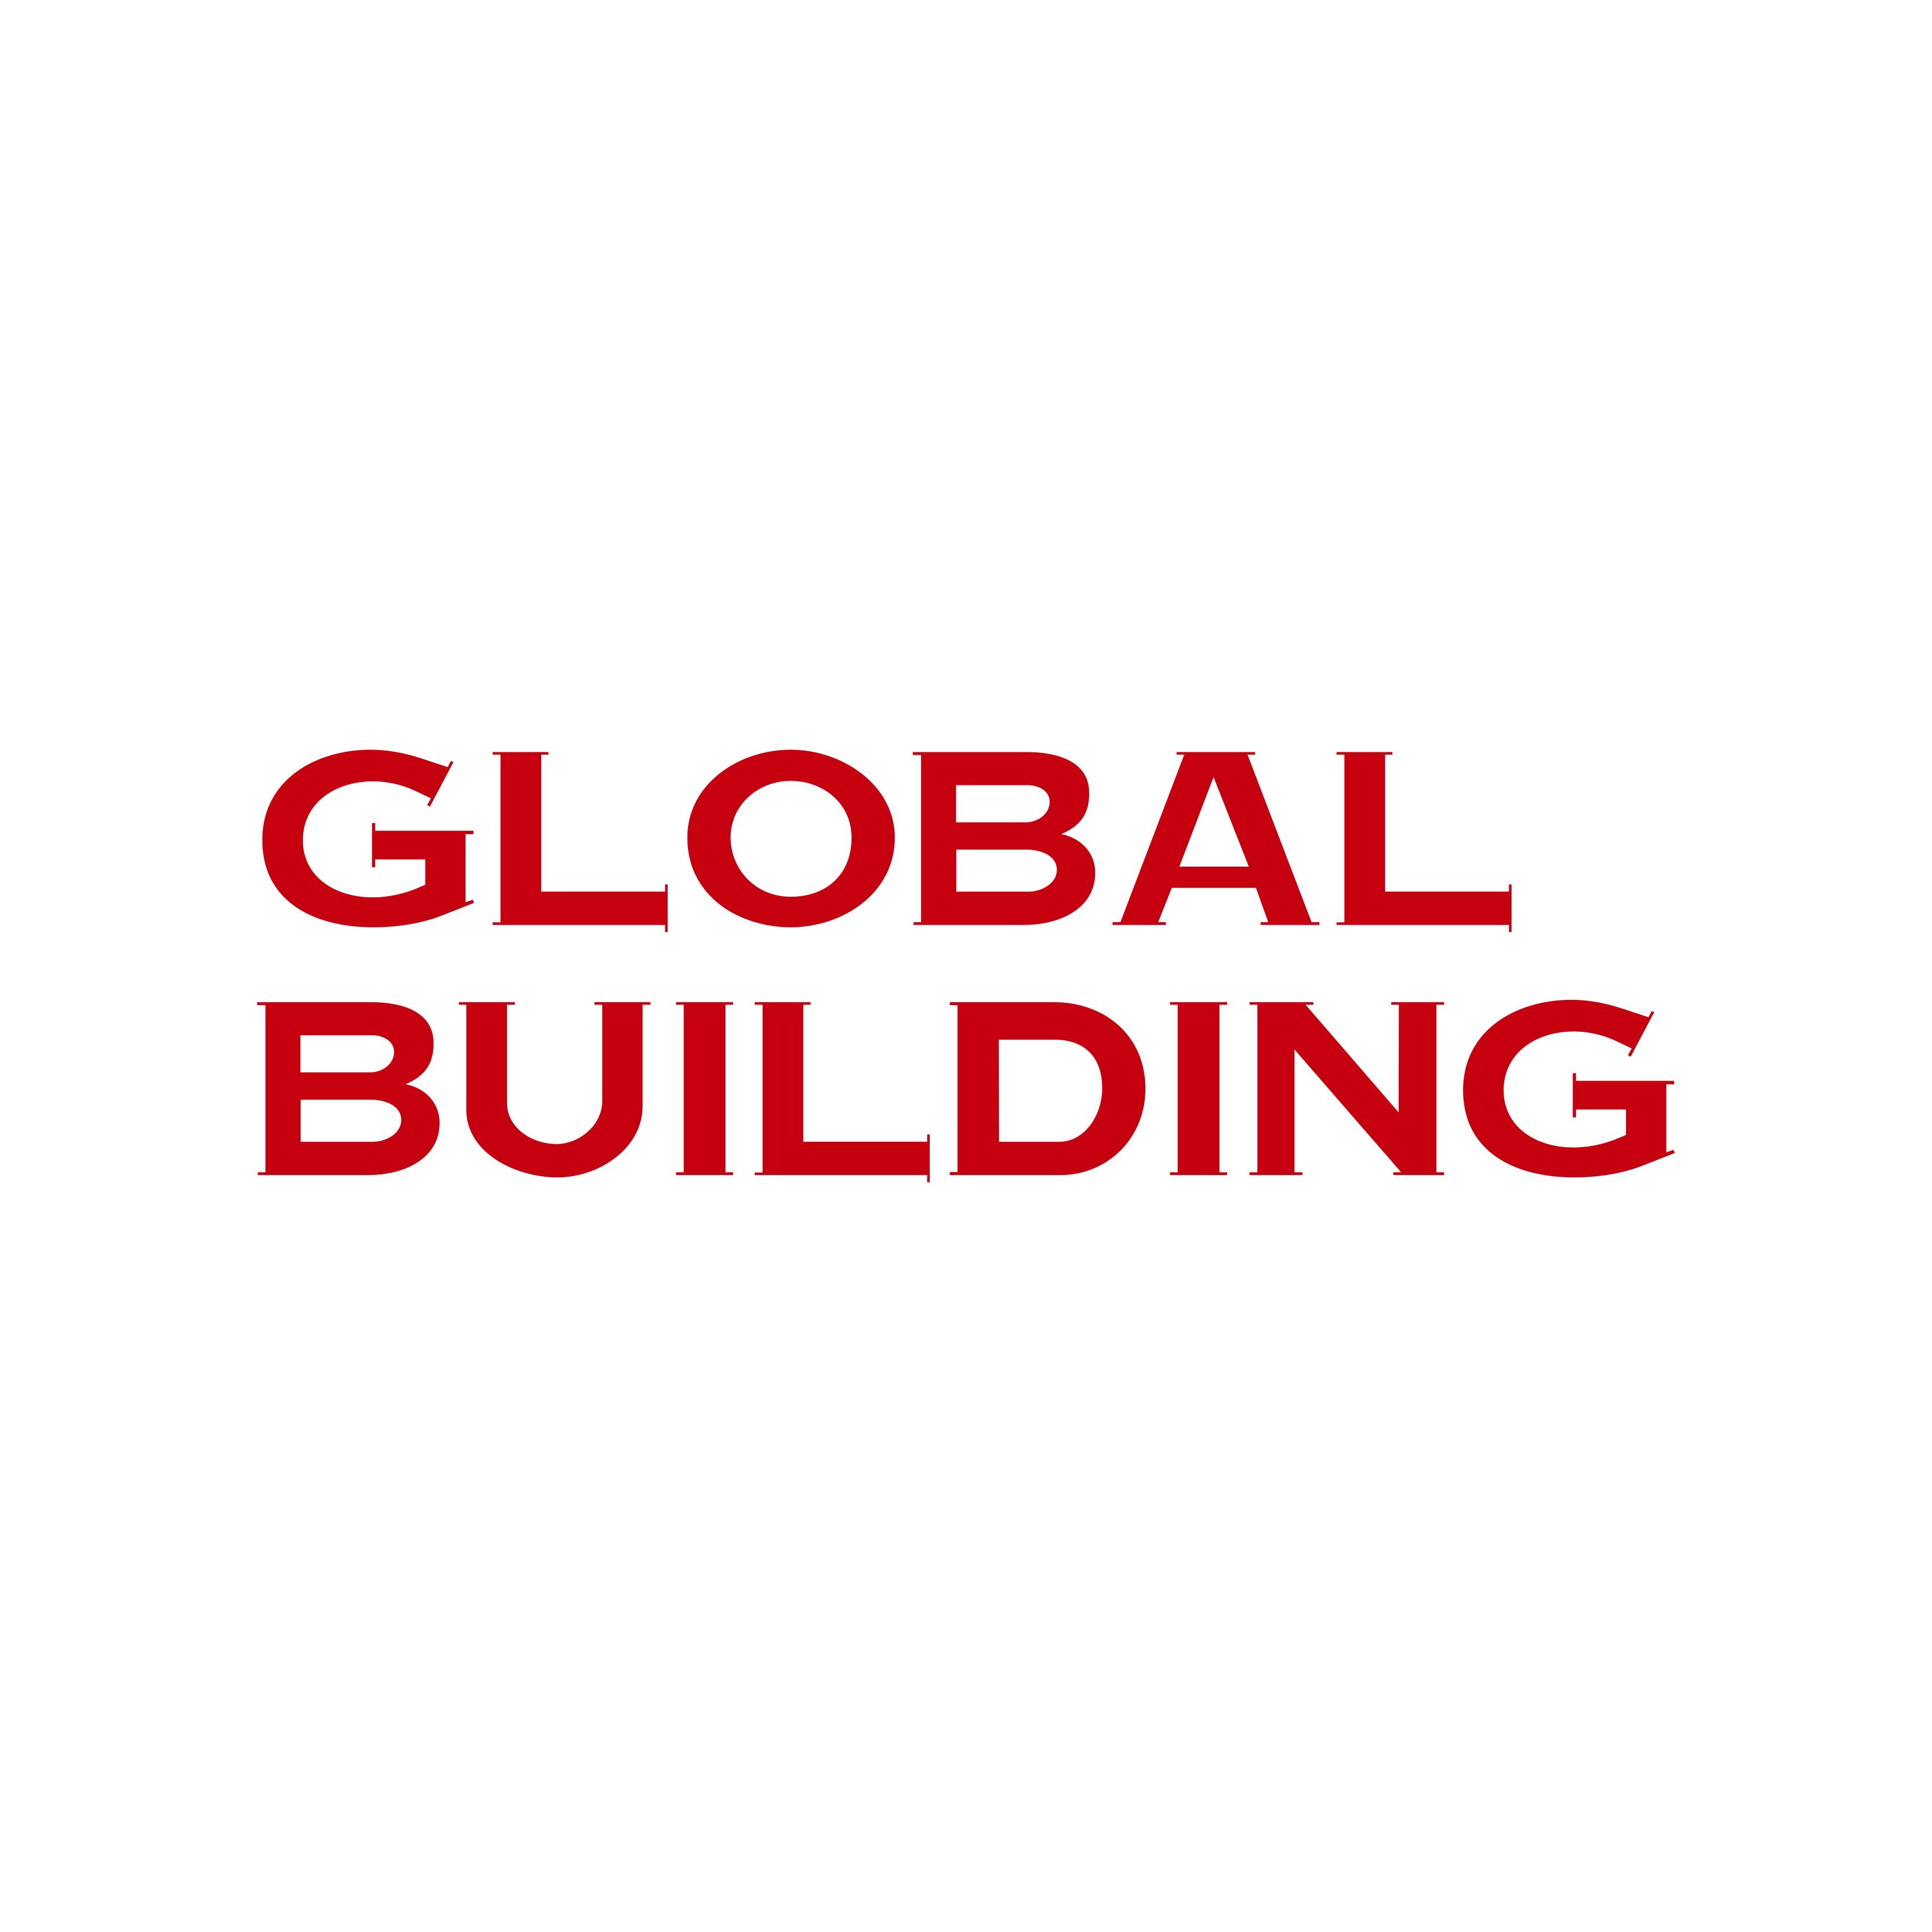 GLOBAL BUILDING